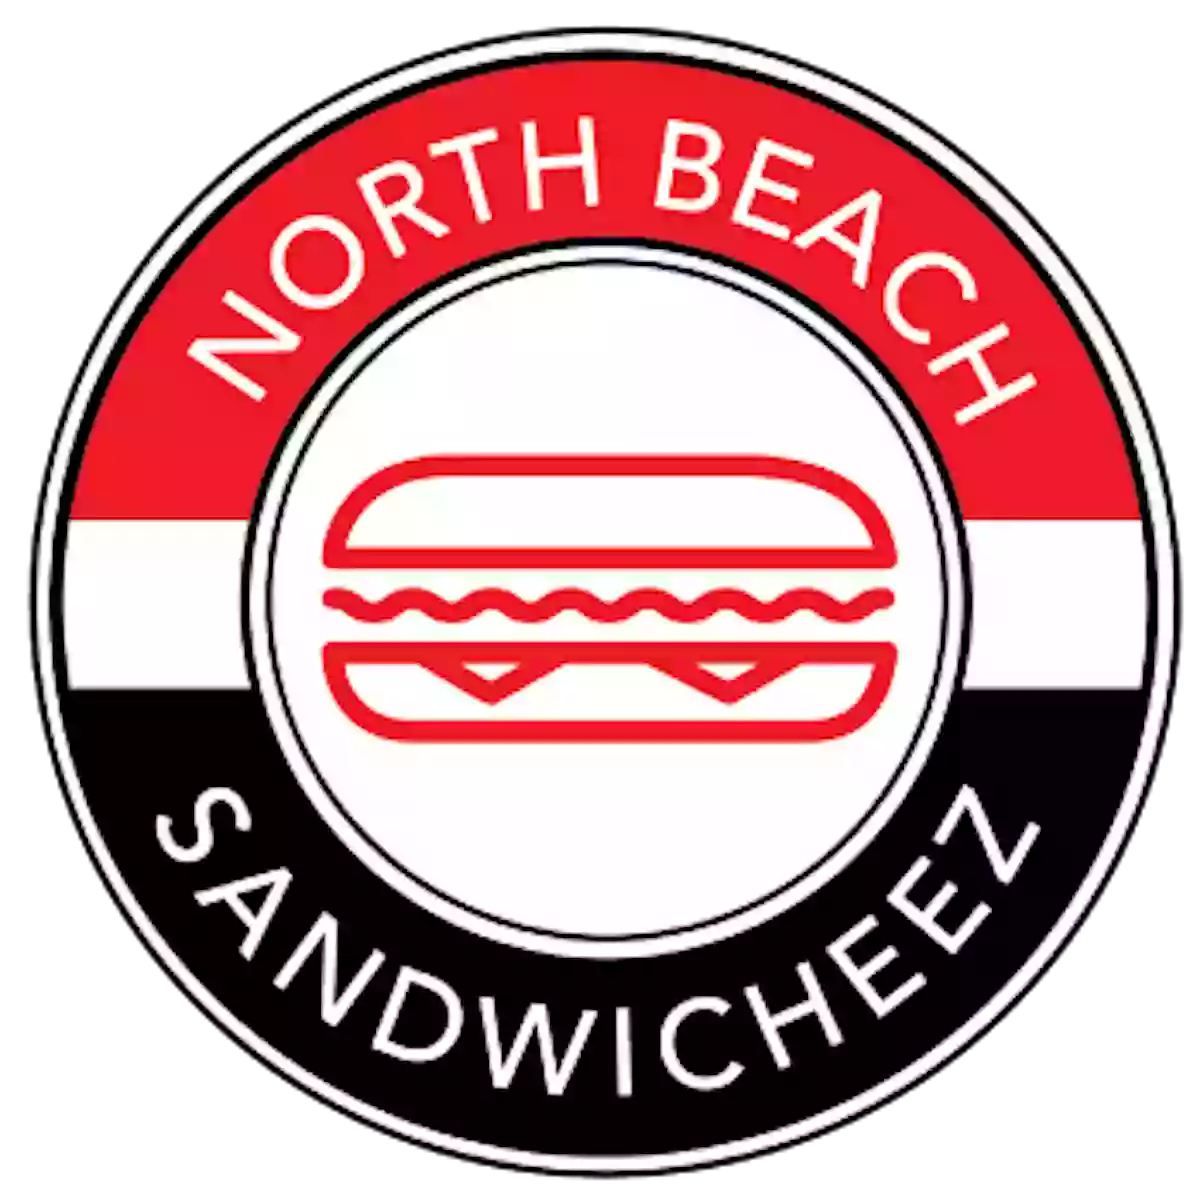 North Beach Sandwicheez and Cafe